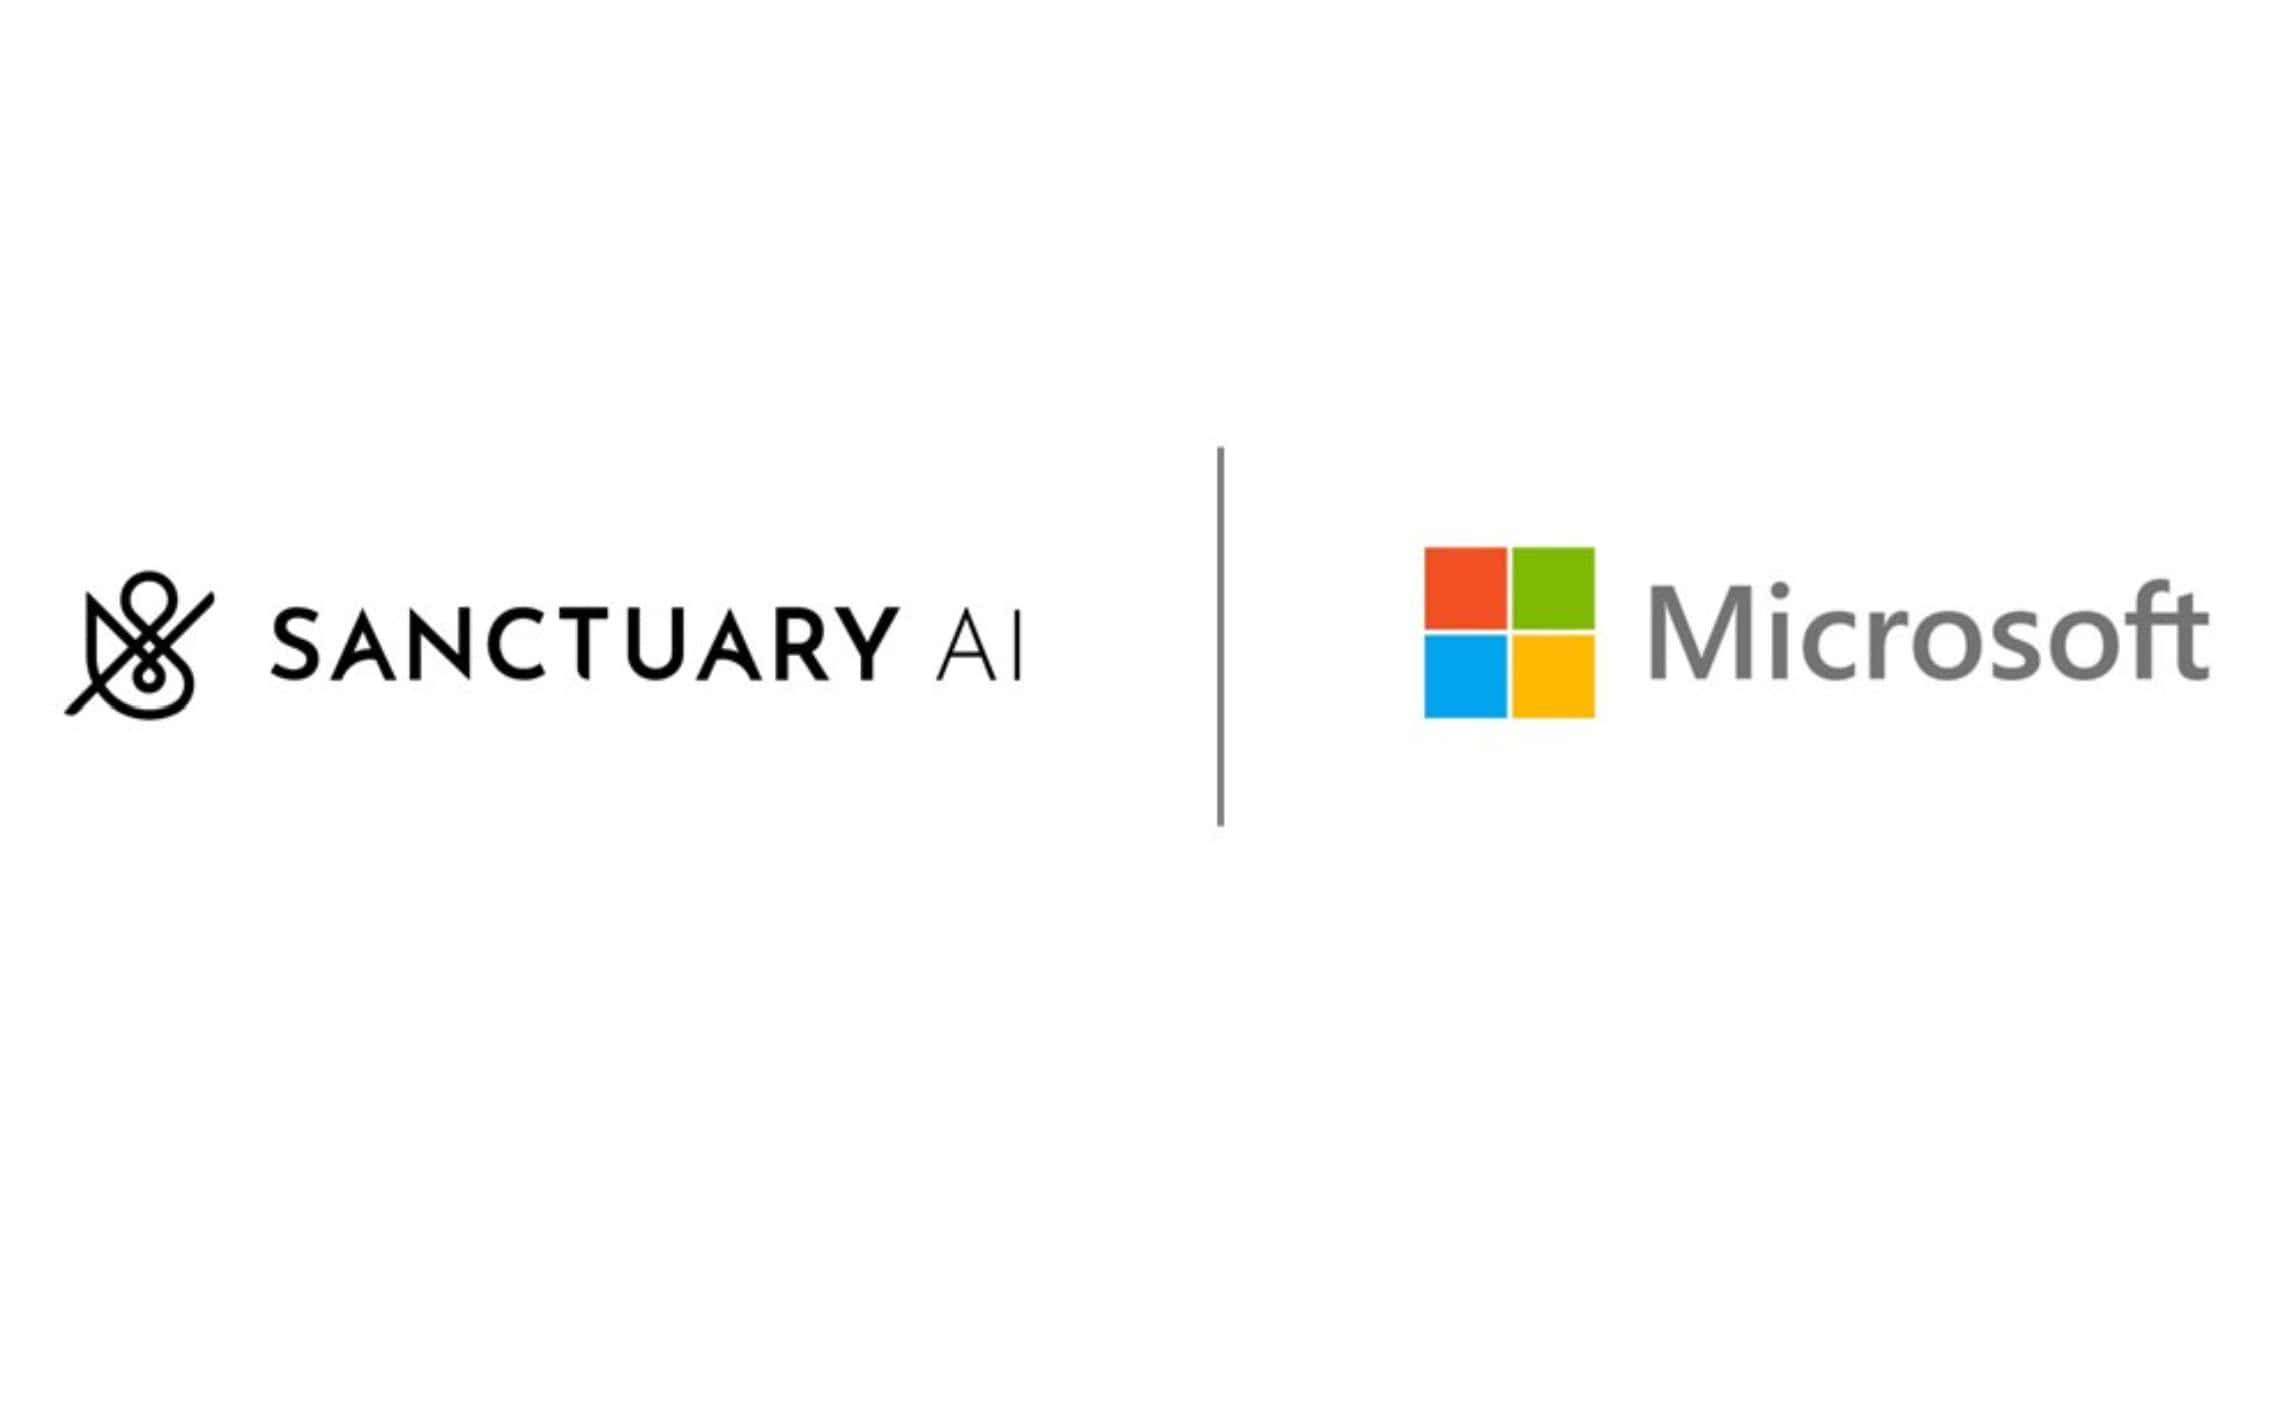 Sztuczna inteligencja Microsoftu Sanktuarium